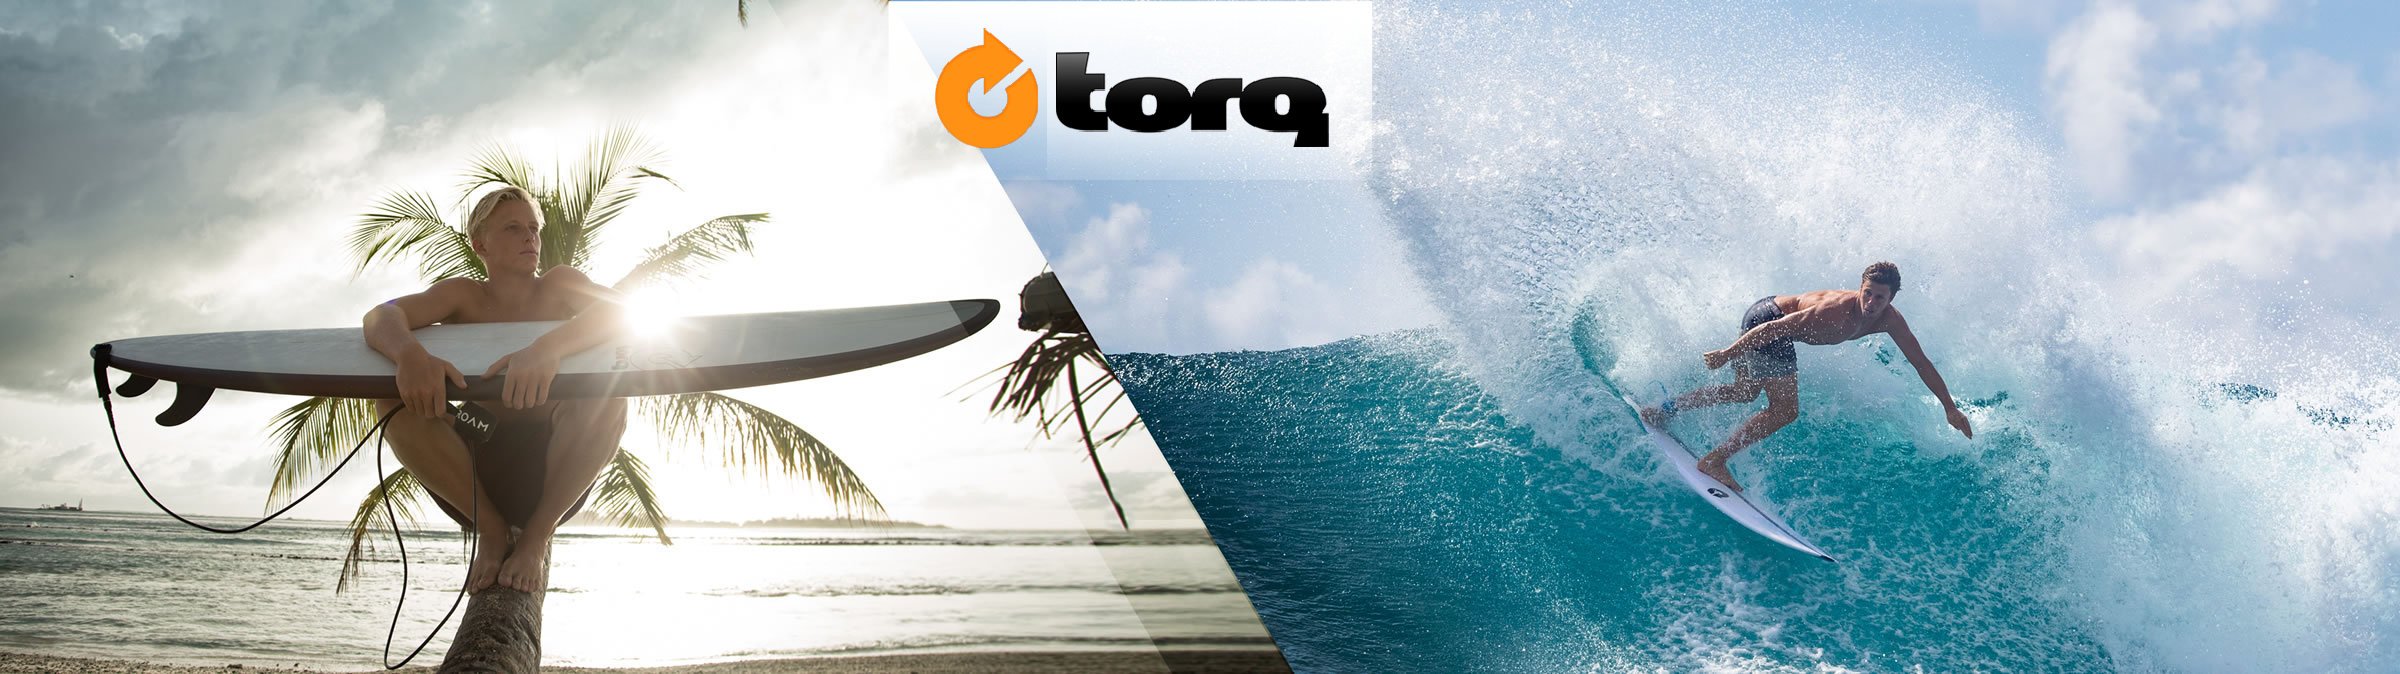 Torq Surfboards online store europe header